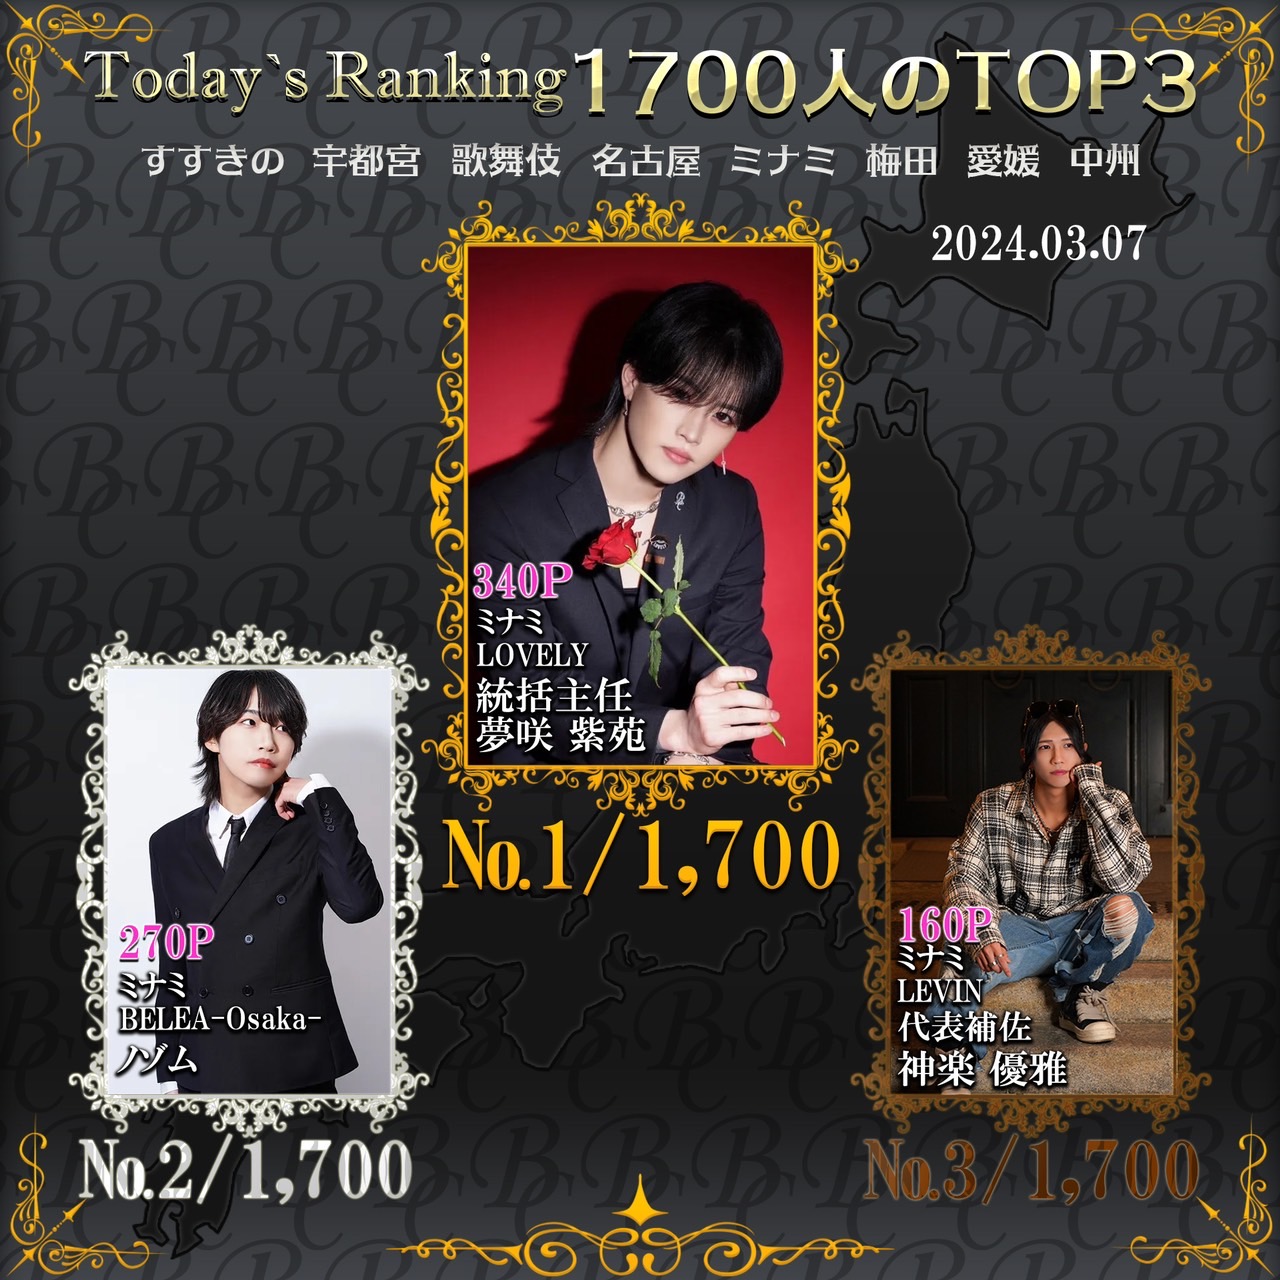 3/7 Today’s Ranking